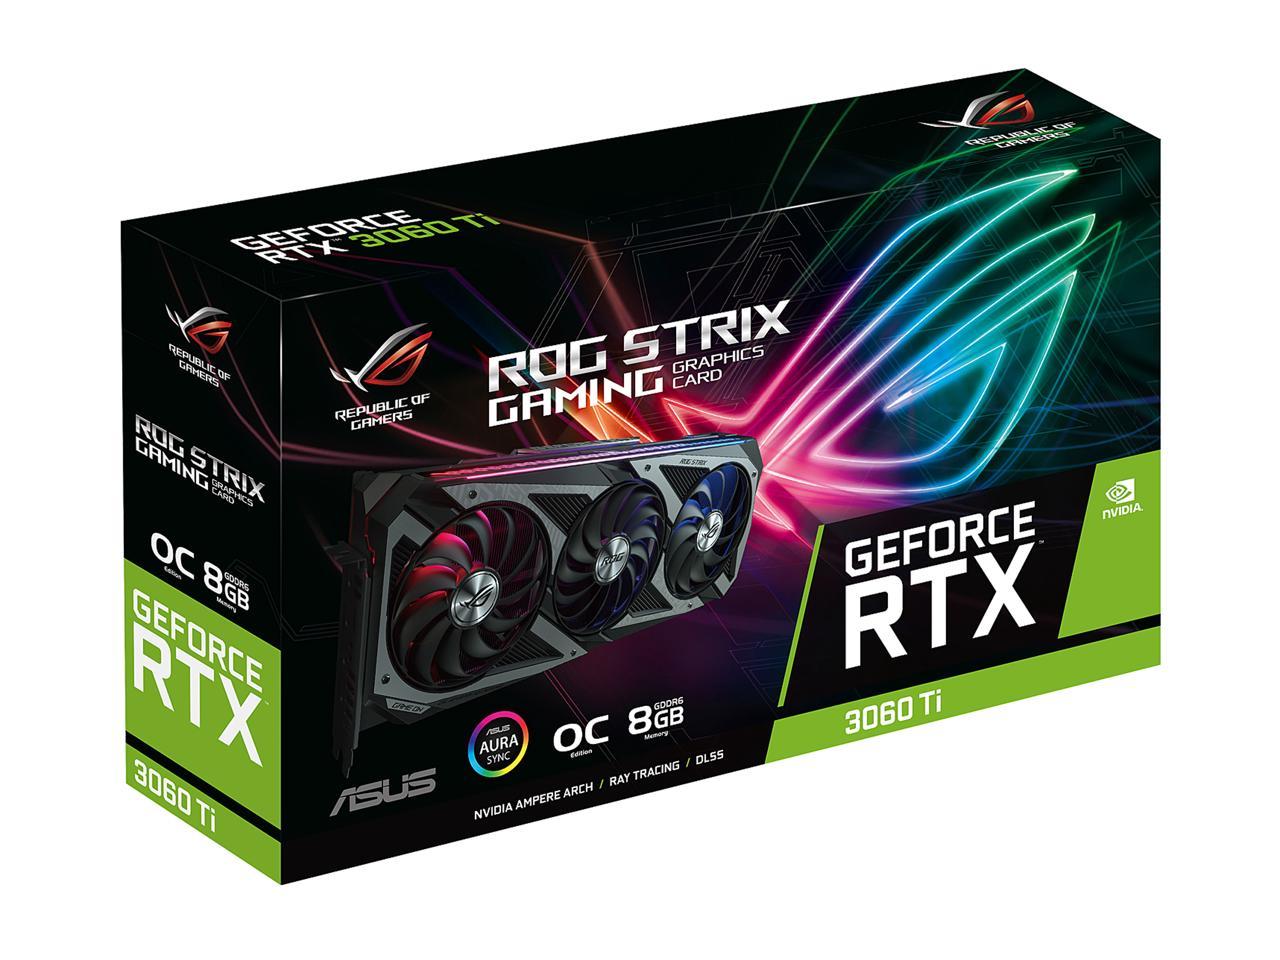 ASUS ROG STRIX GeForce RTX 3060 Ti Video Card - Newegg.com